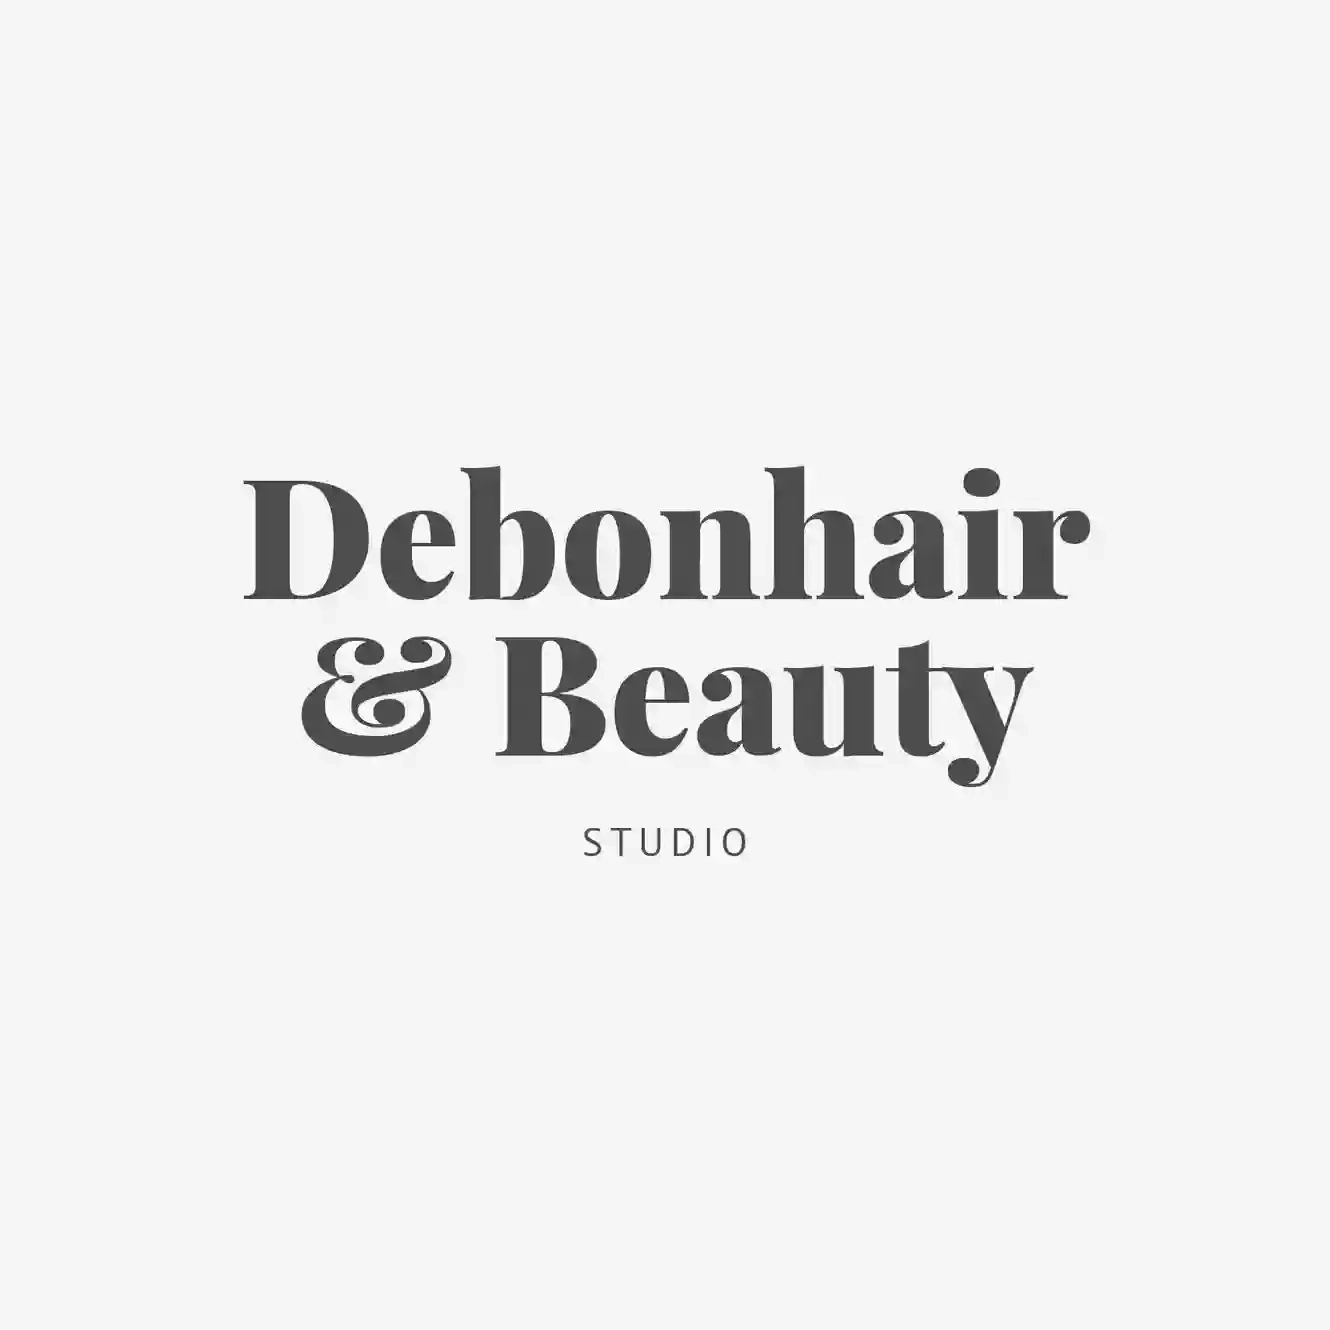 Debonhair & Beauty Studio